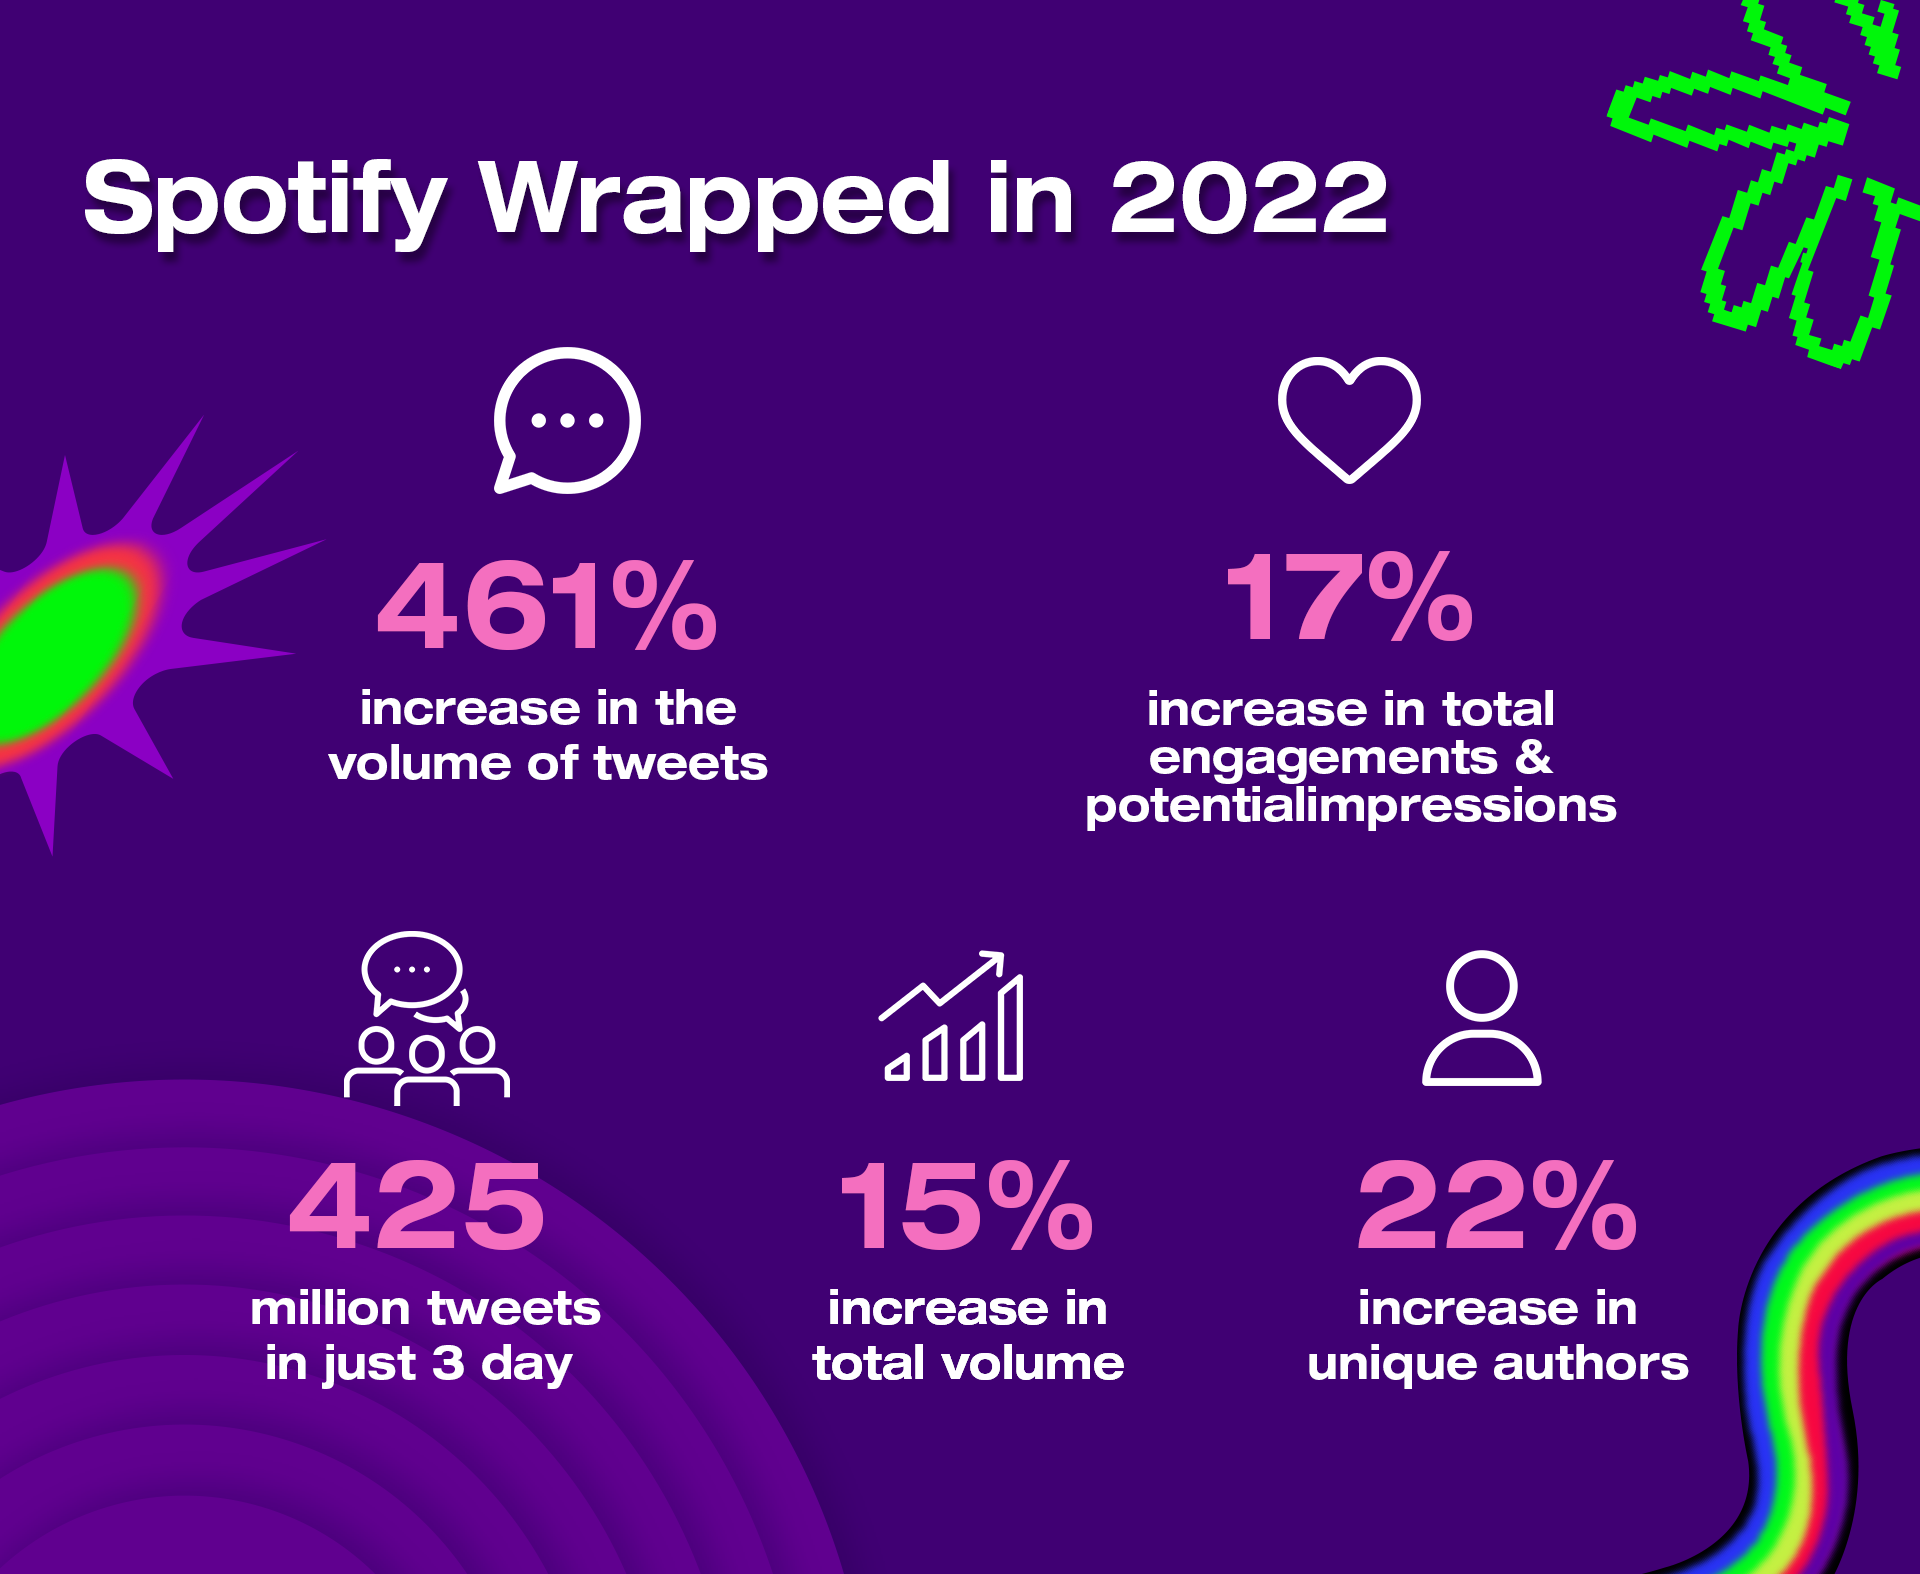 SpotifyWrapped2022-Statistics